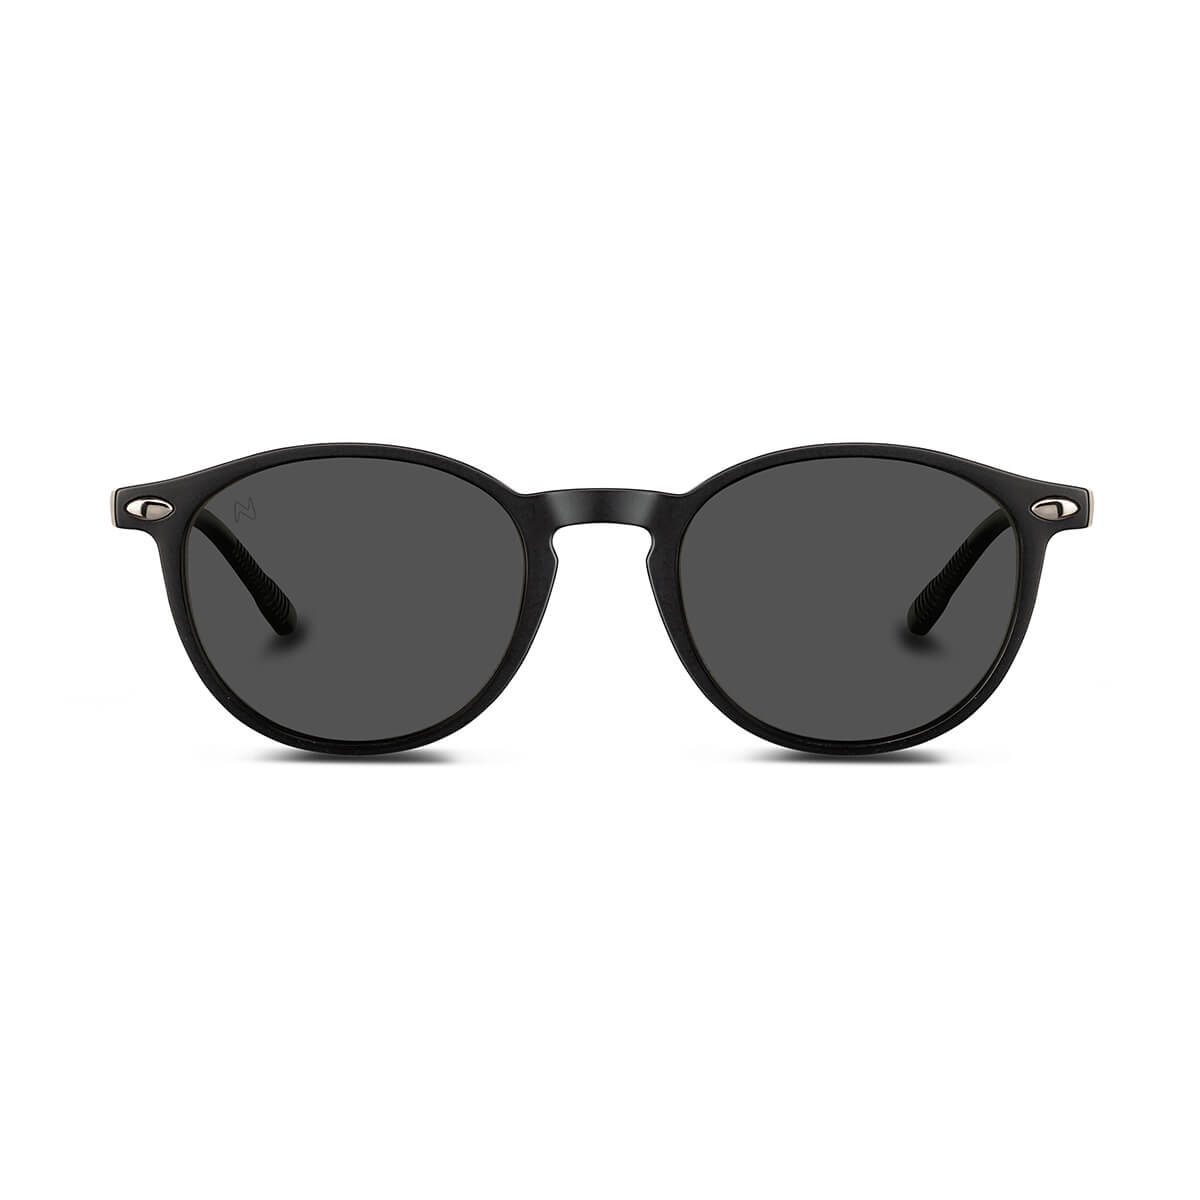 Pair of Sunglasses for Essential Cruzy Black Face